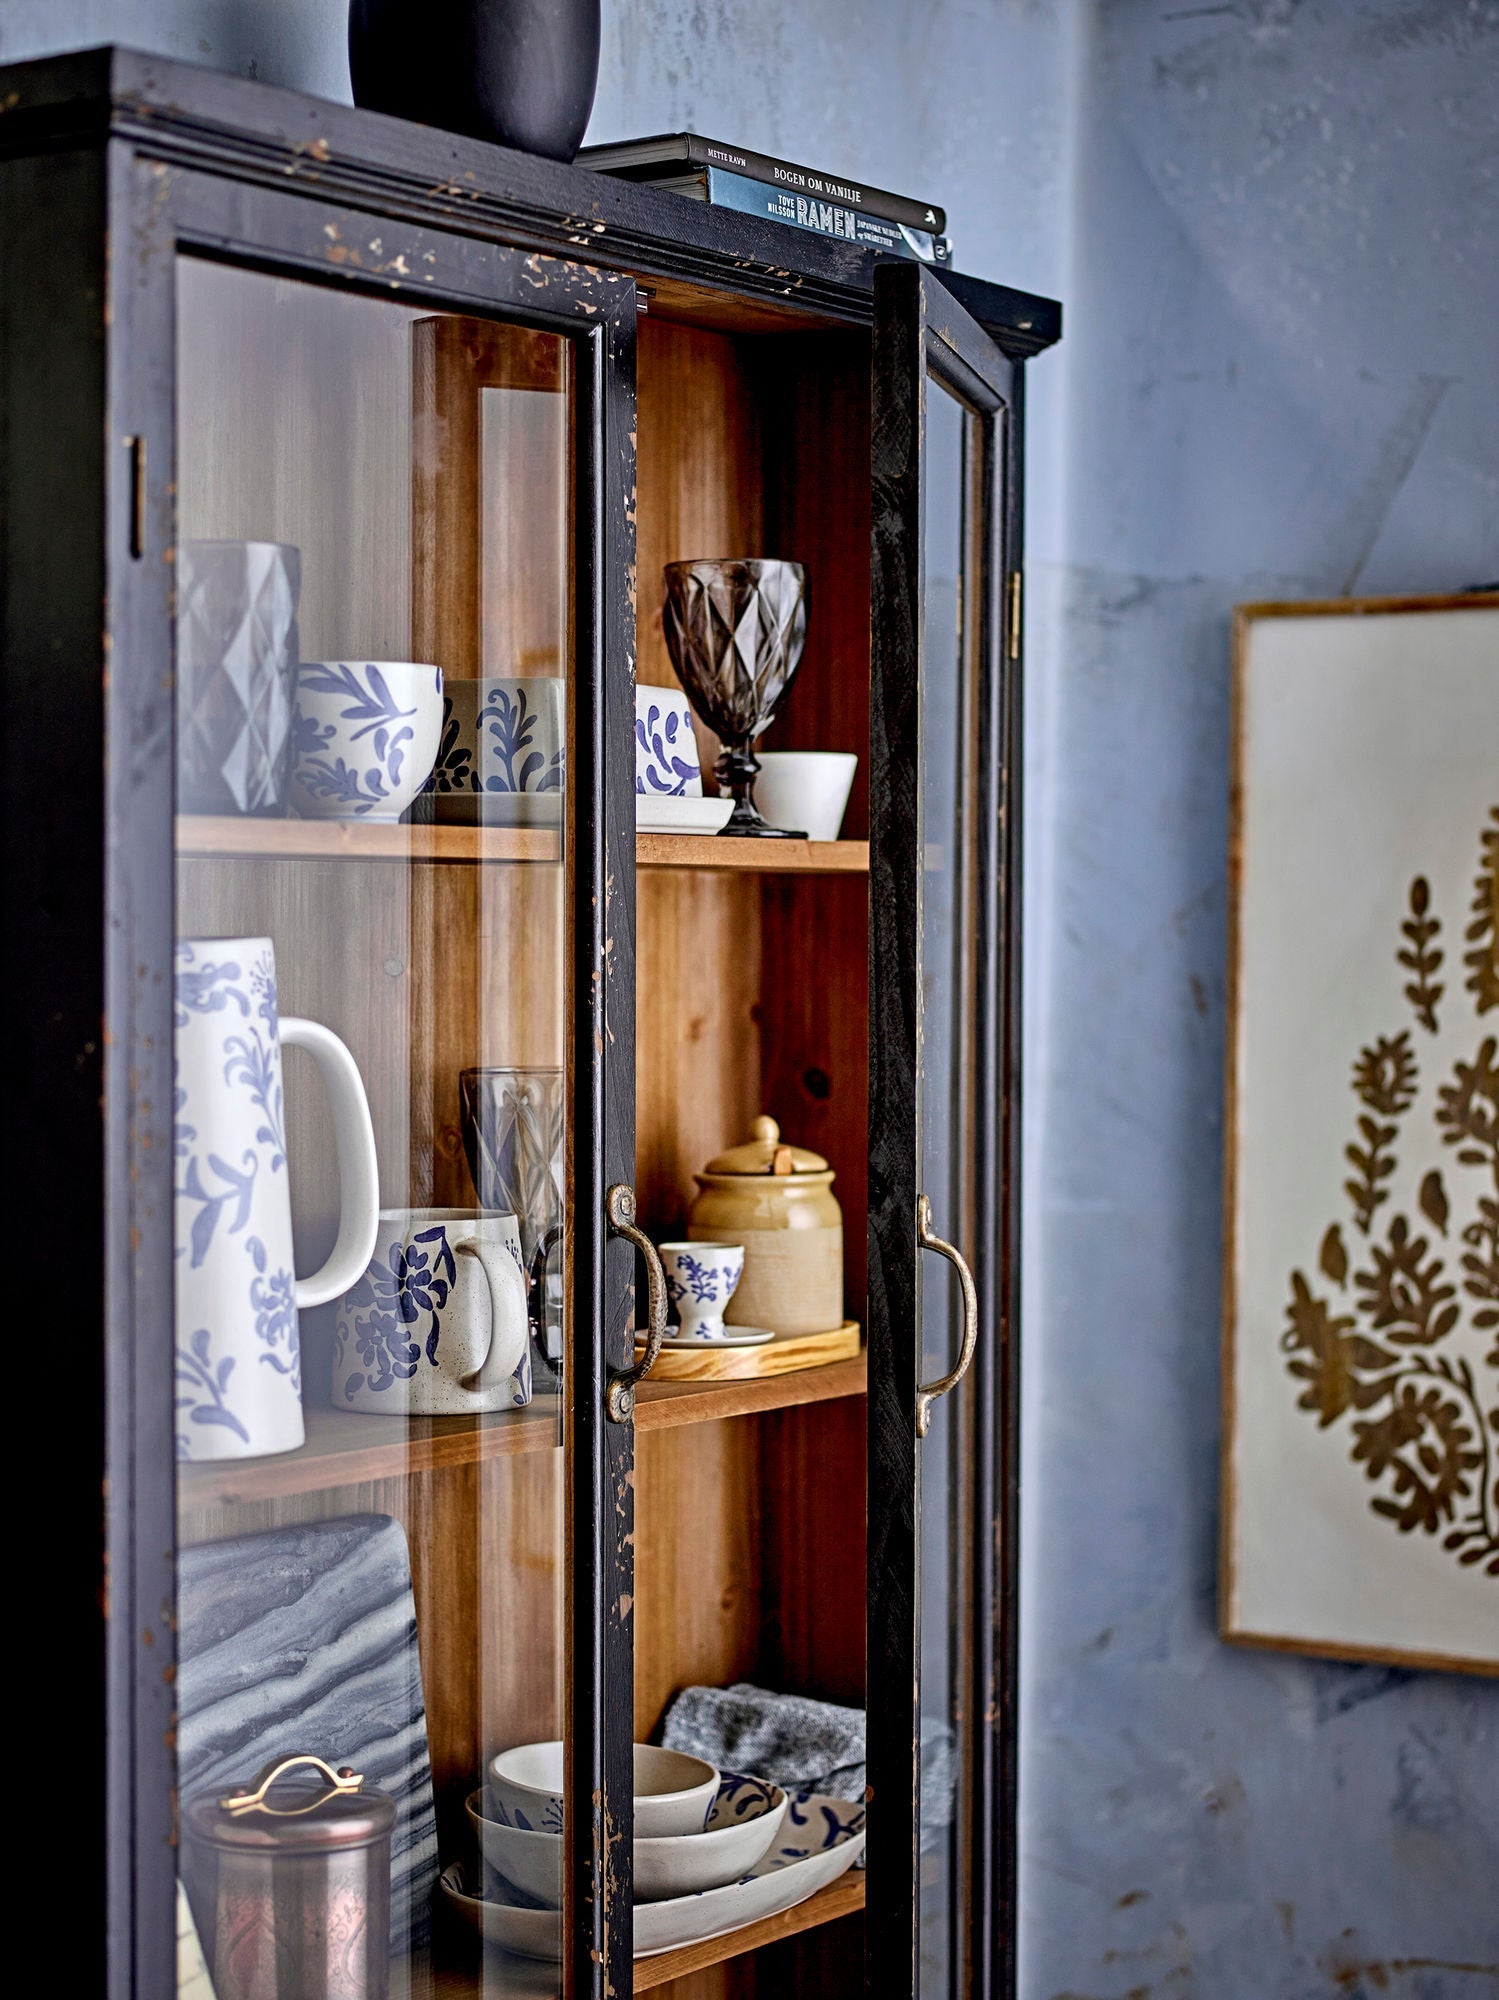 Creative Collection Hazem Cabinet, Black, Firwood